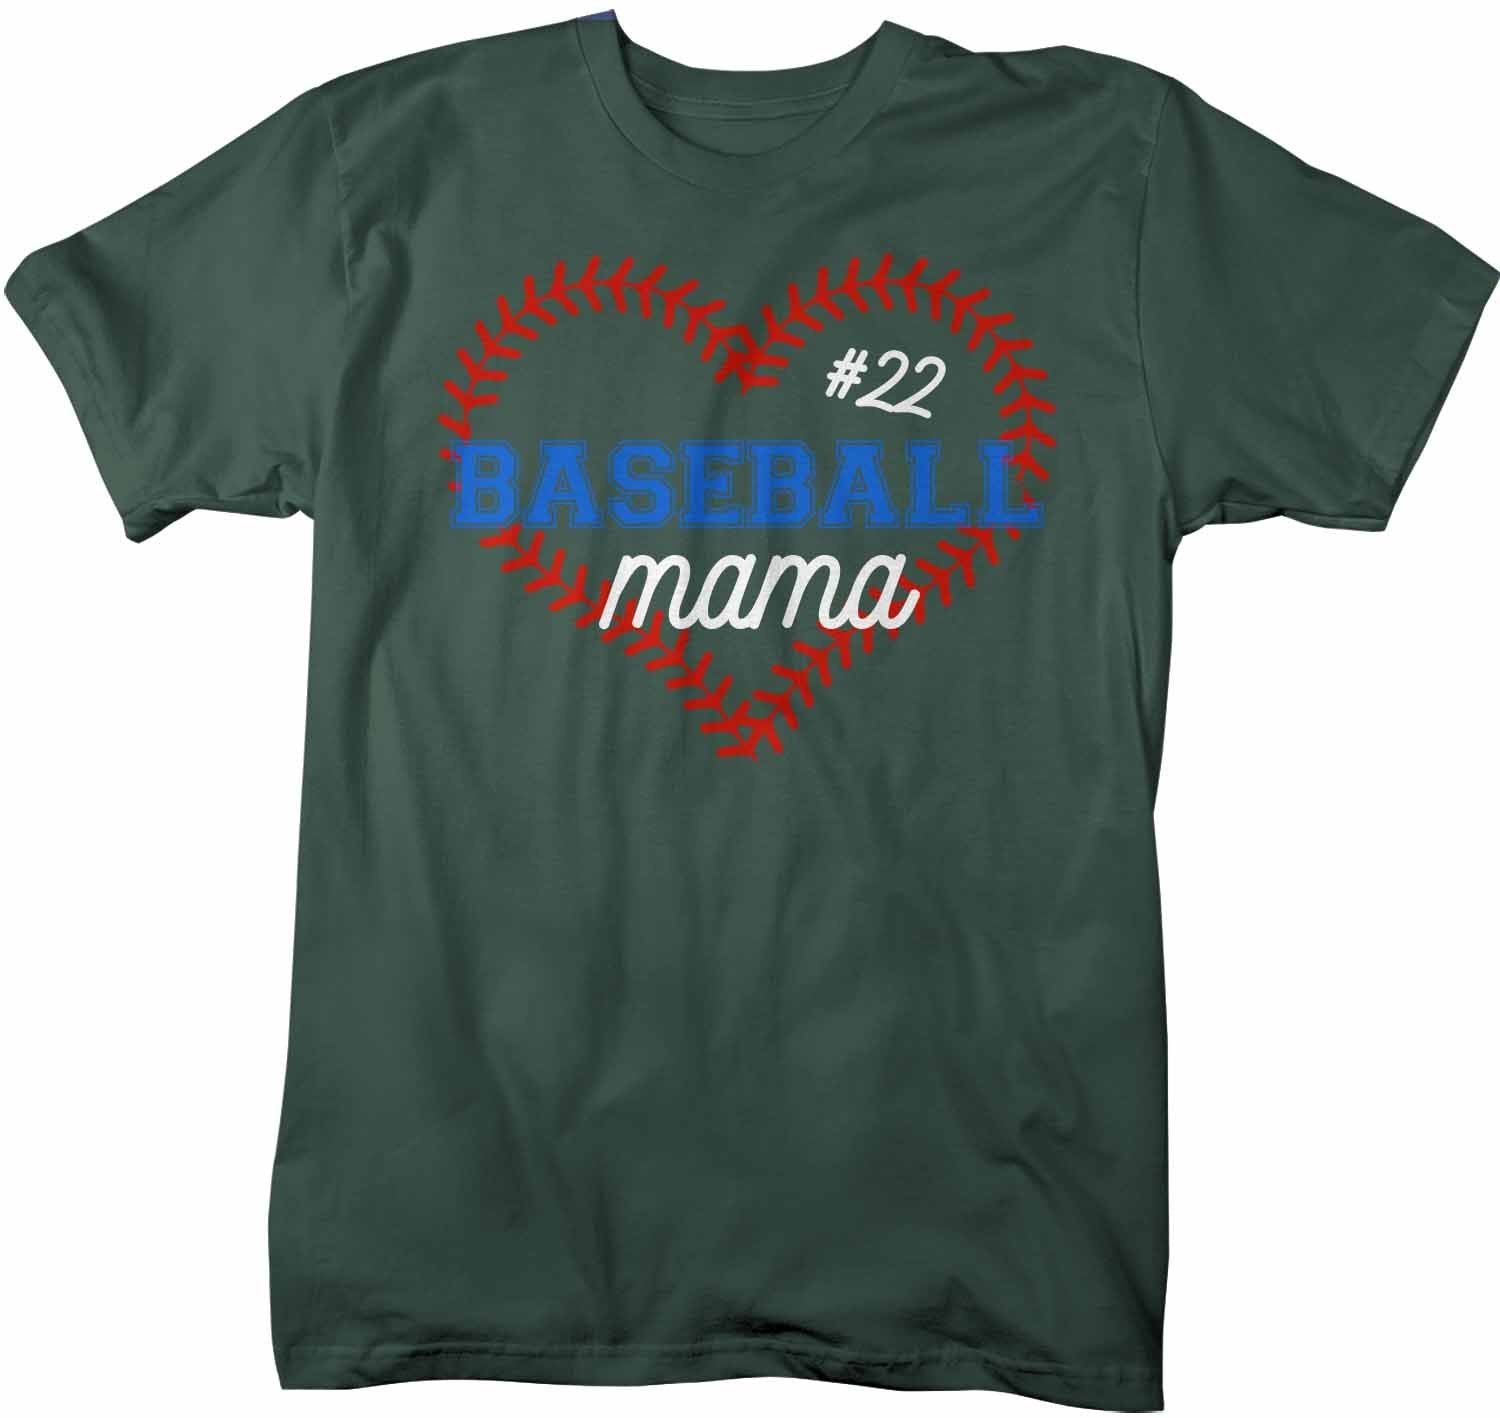 monogrammed baseball shirts for moms